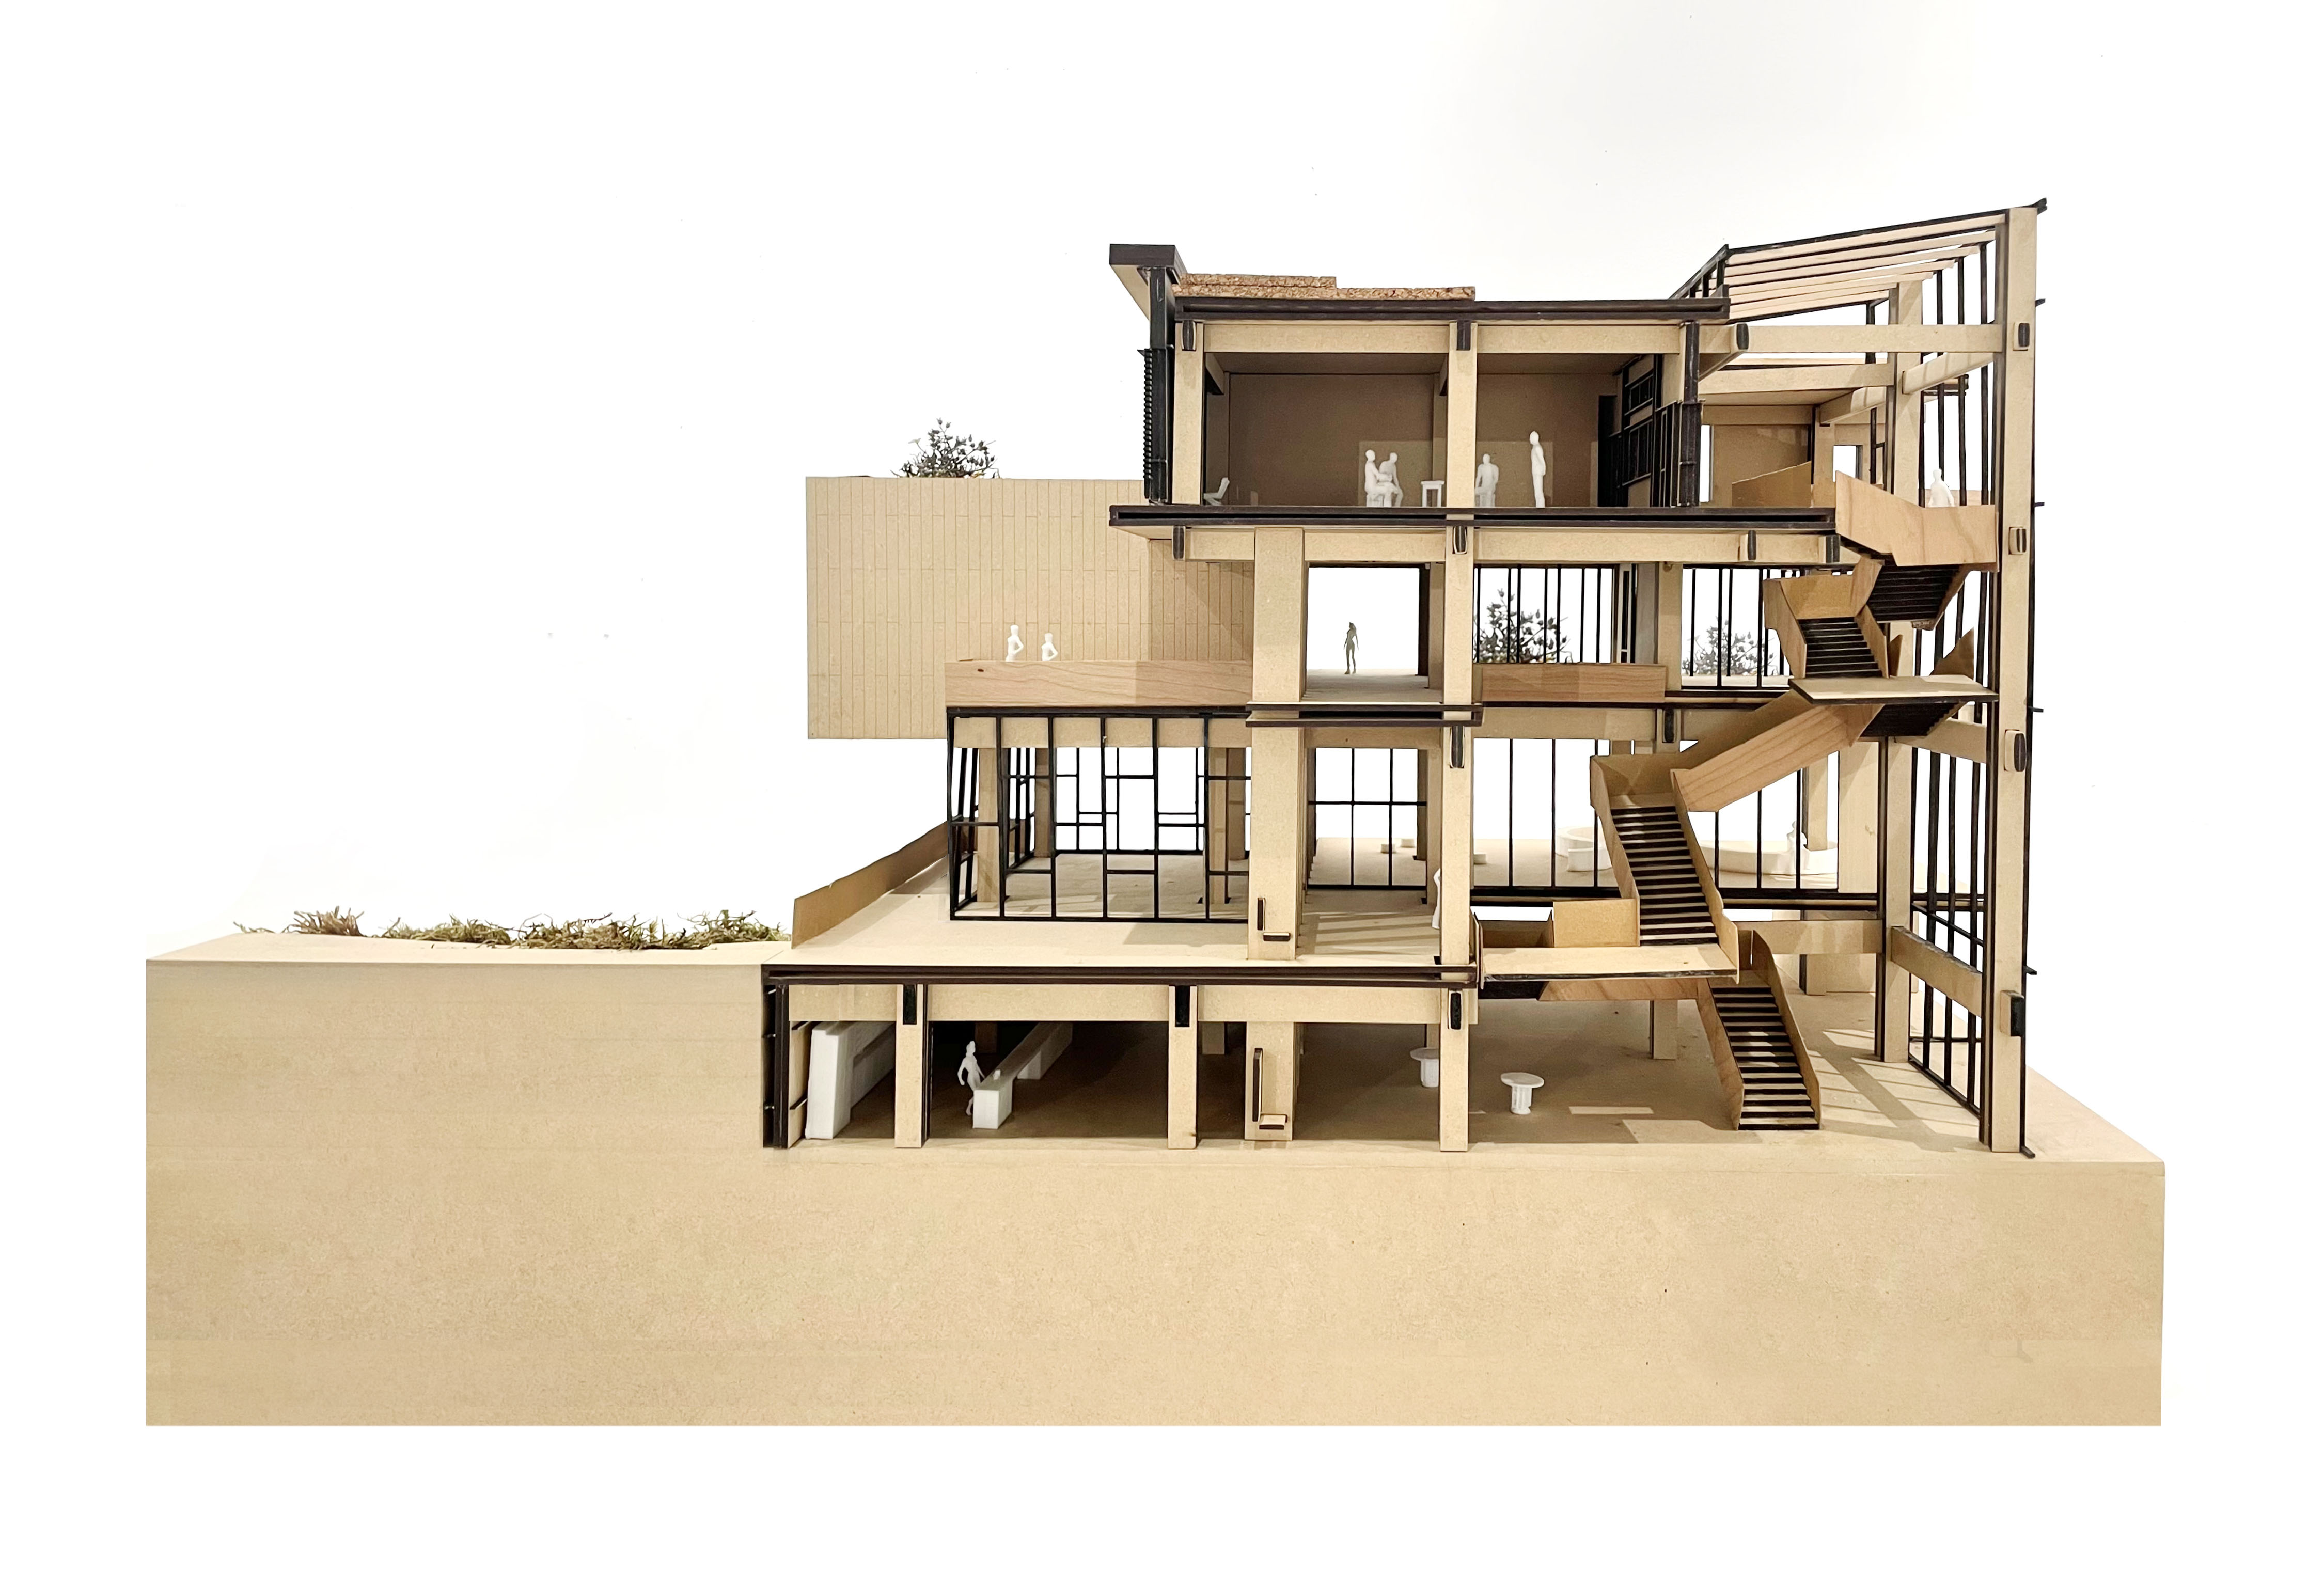 Model of the Dufferin Grove Alternative School by Haoning Zhao and Jennifer Jia Yi Zhu